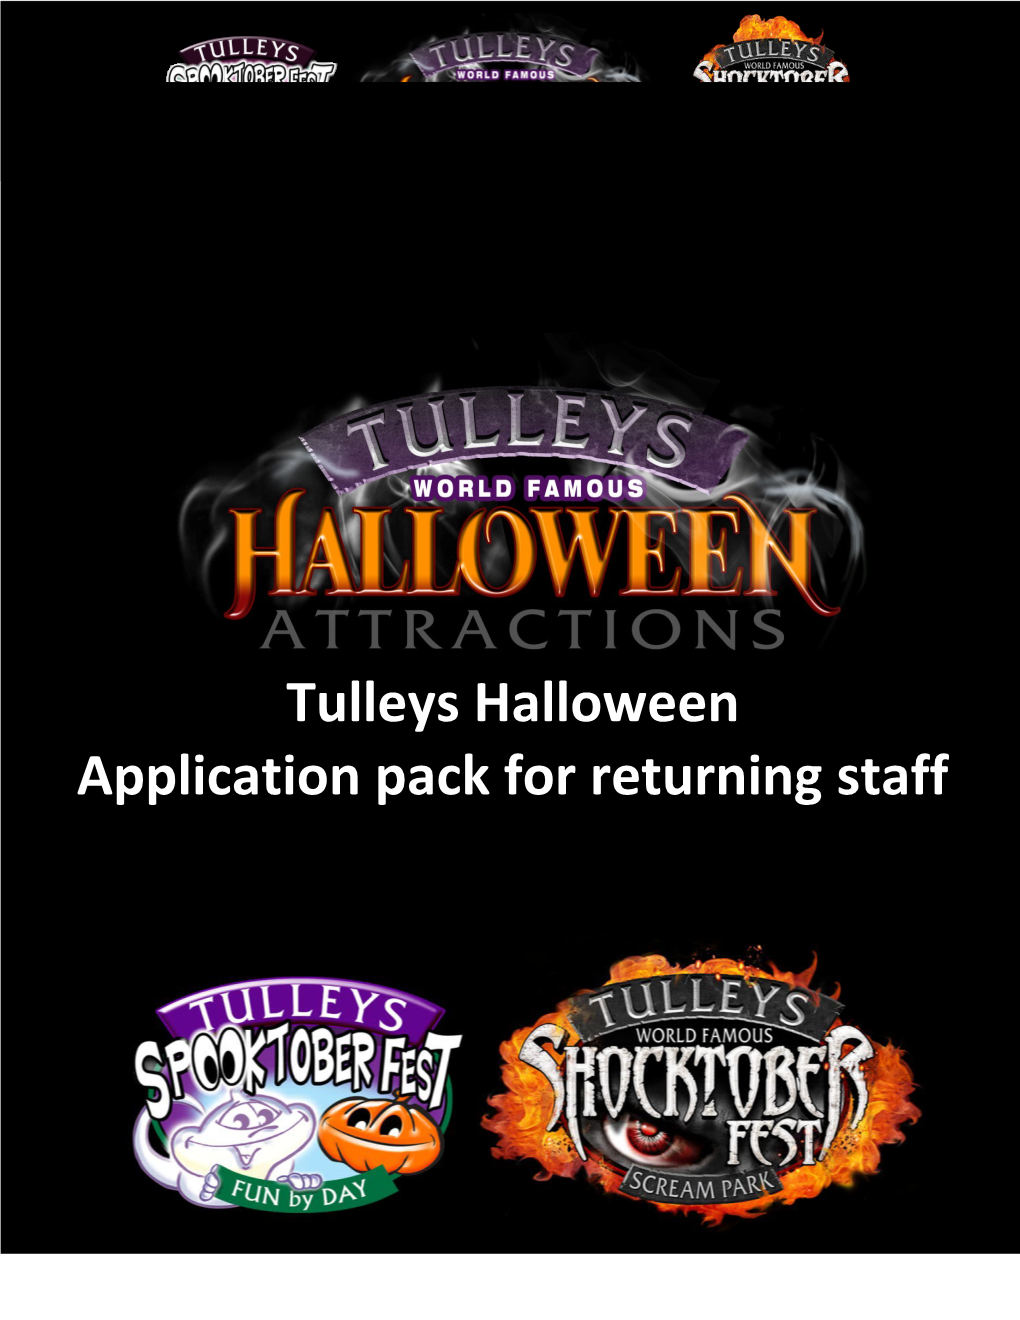 Tulleys Farm Spooktober and Shocktober Fest Scream Park Is the UK S Biggest Halloween Festival